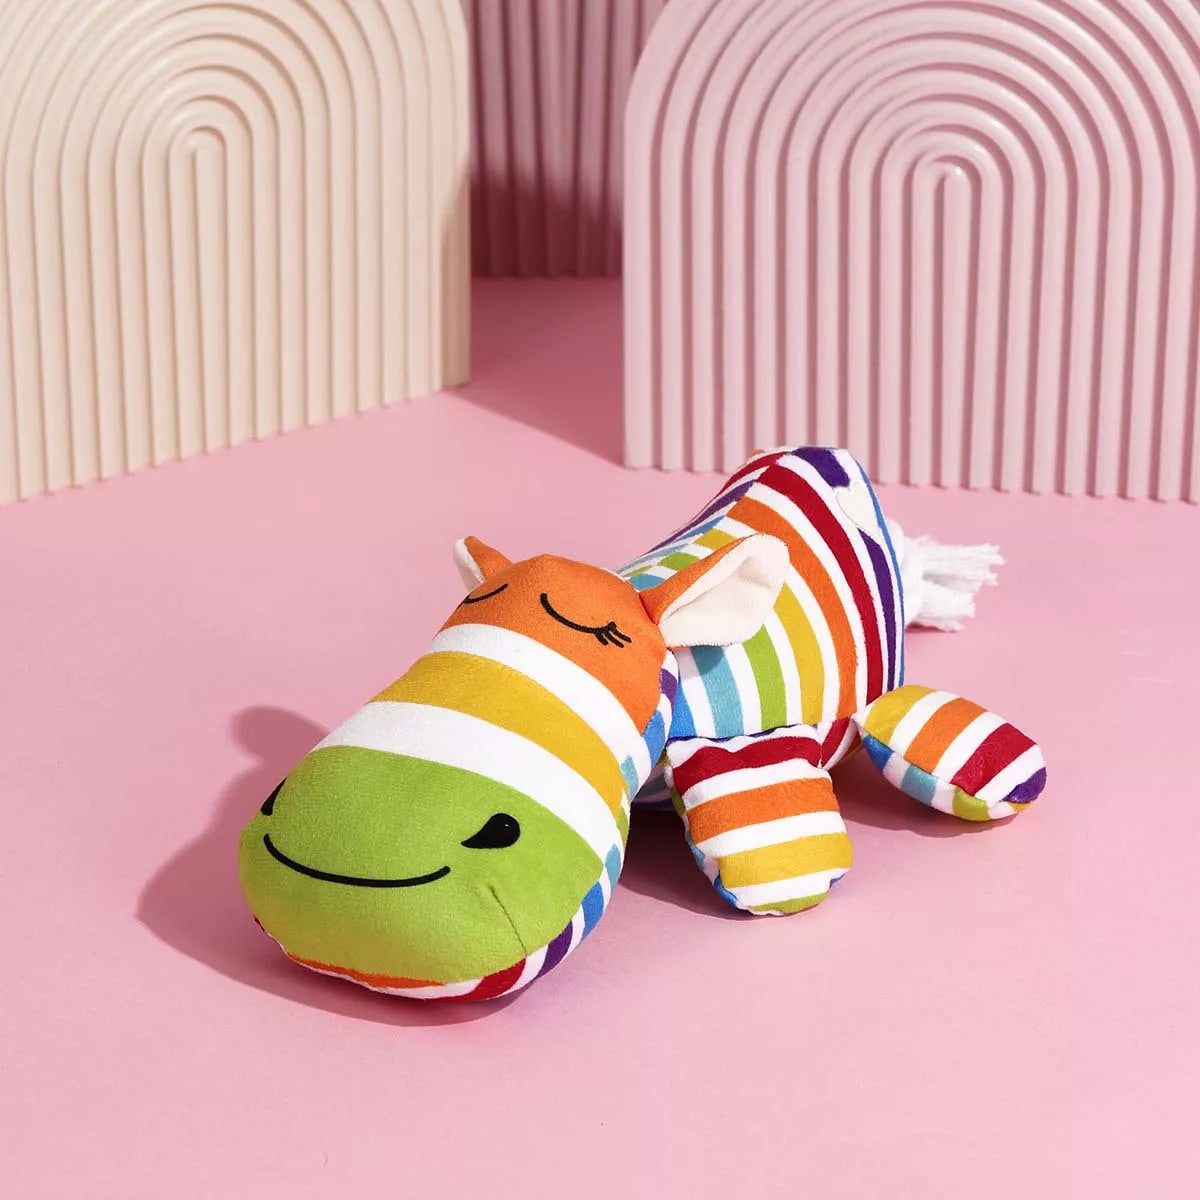 Hailey The Hippo - Rainbow Squeaker Pet Toy